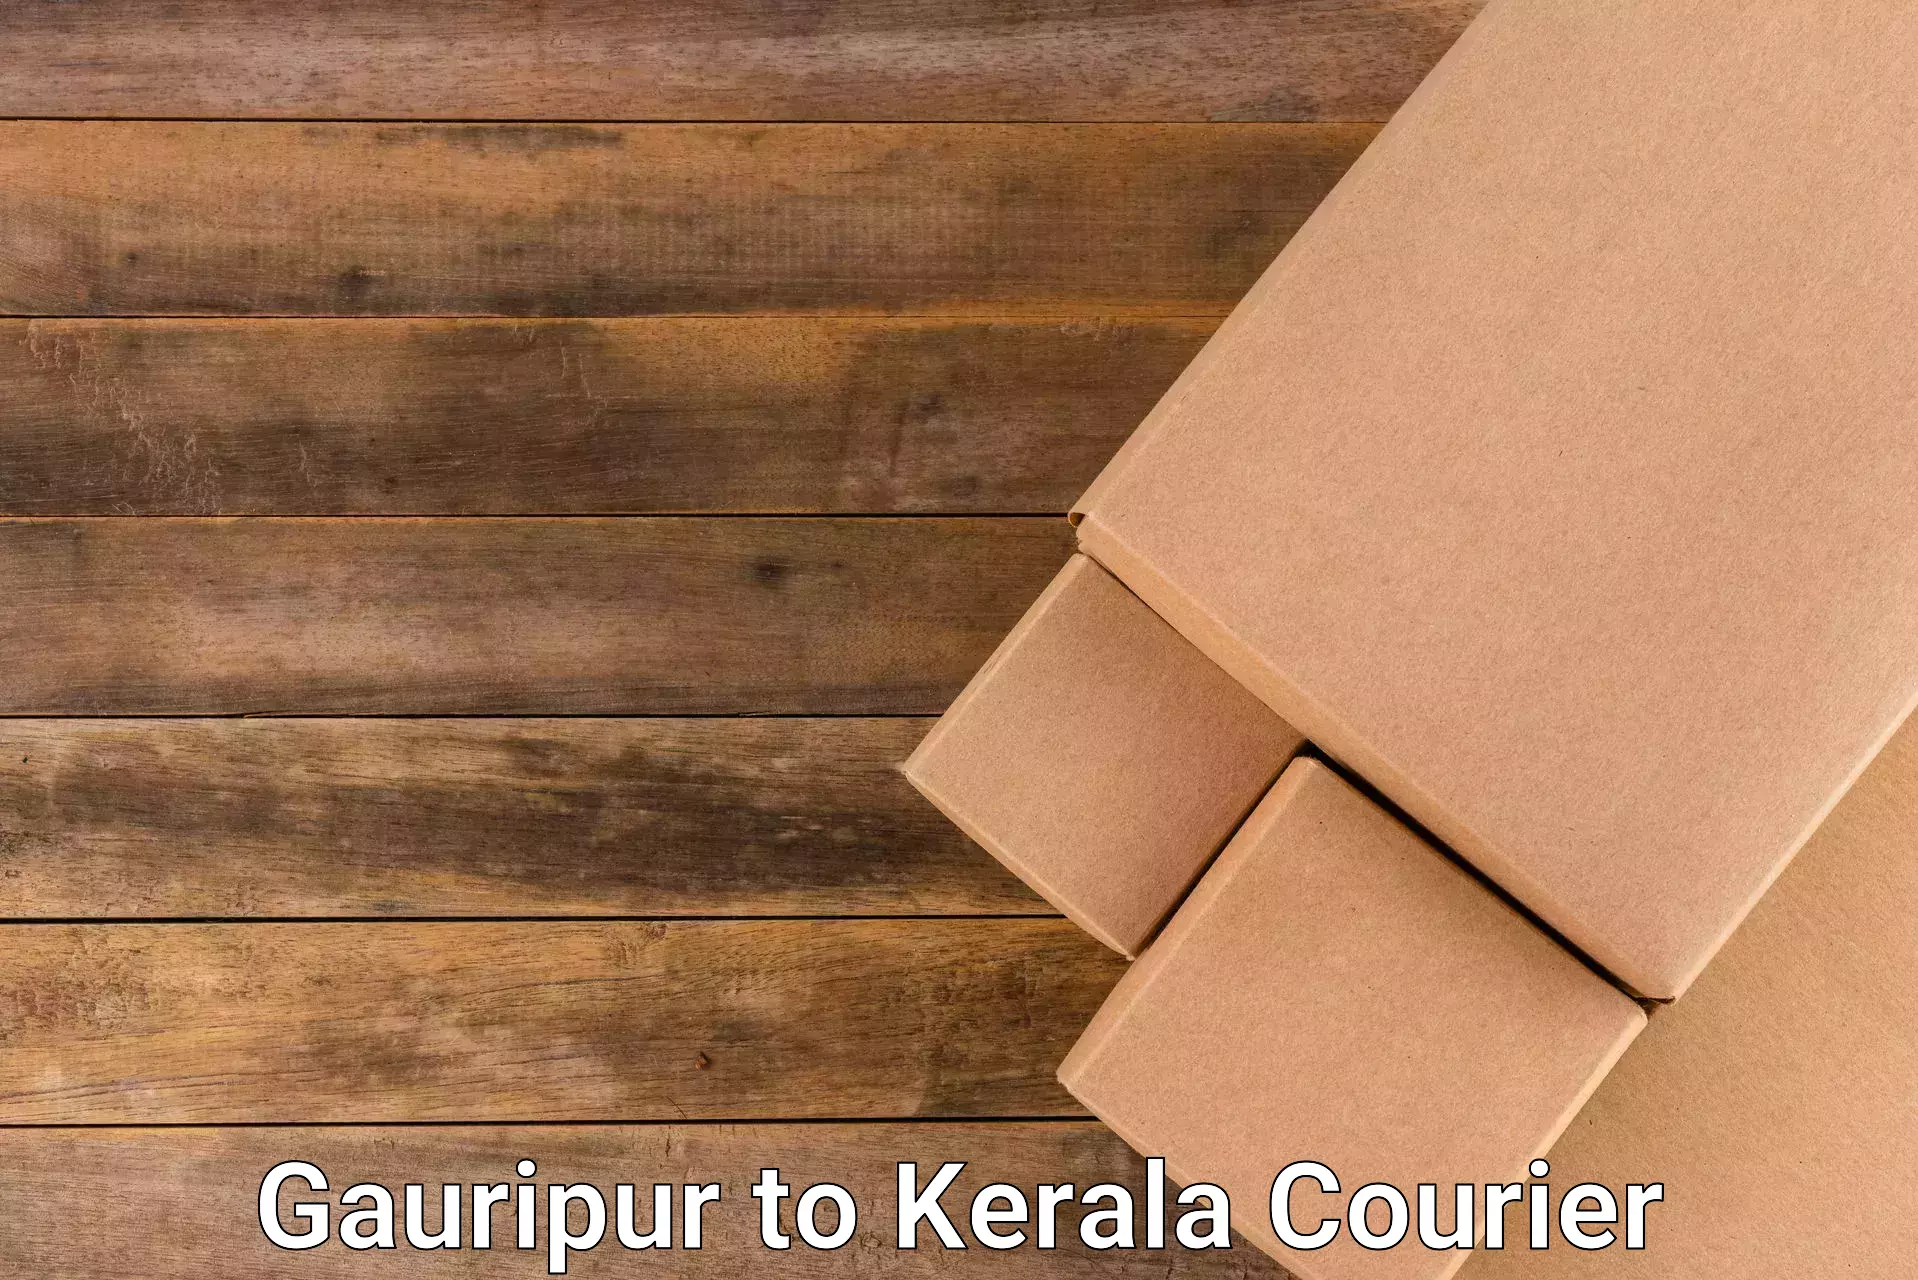 Customized shipping options Gauripur to Cochin Port Kochi